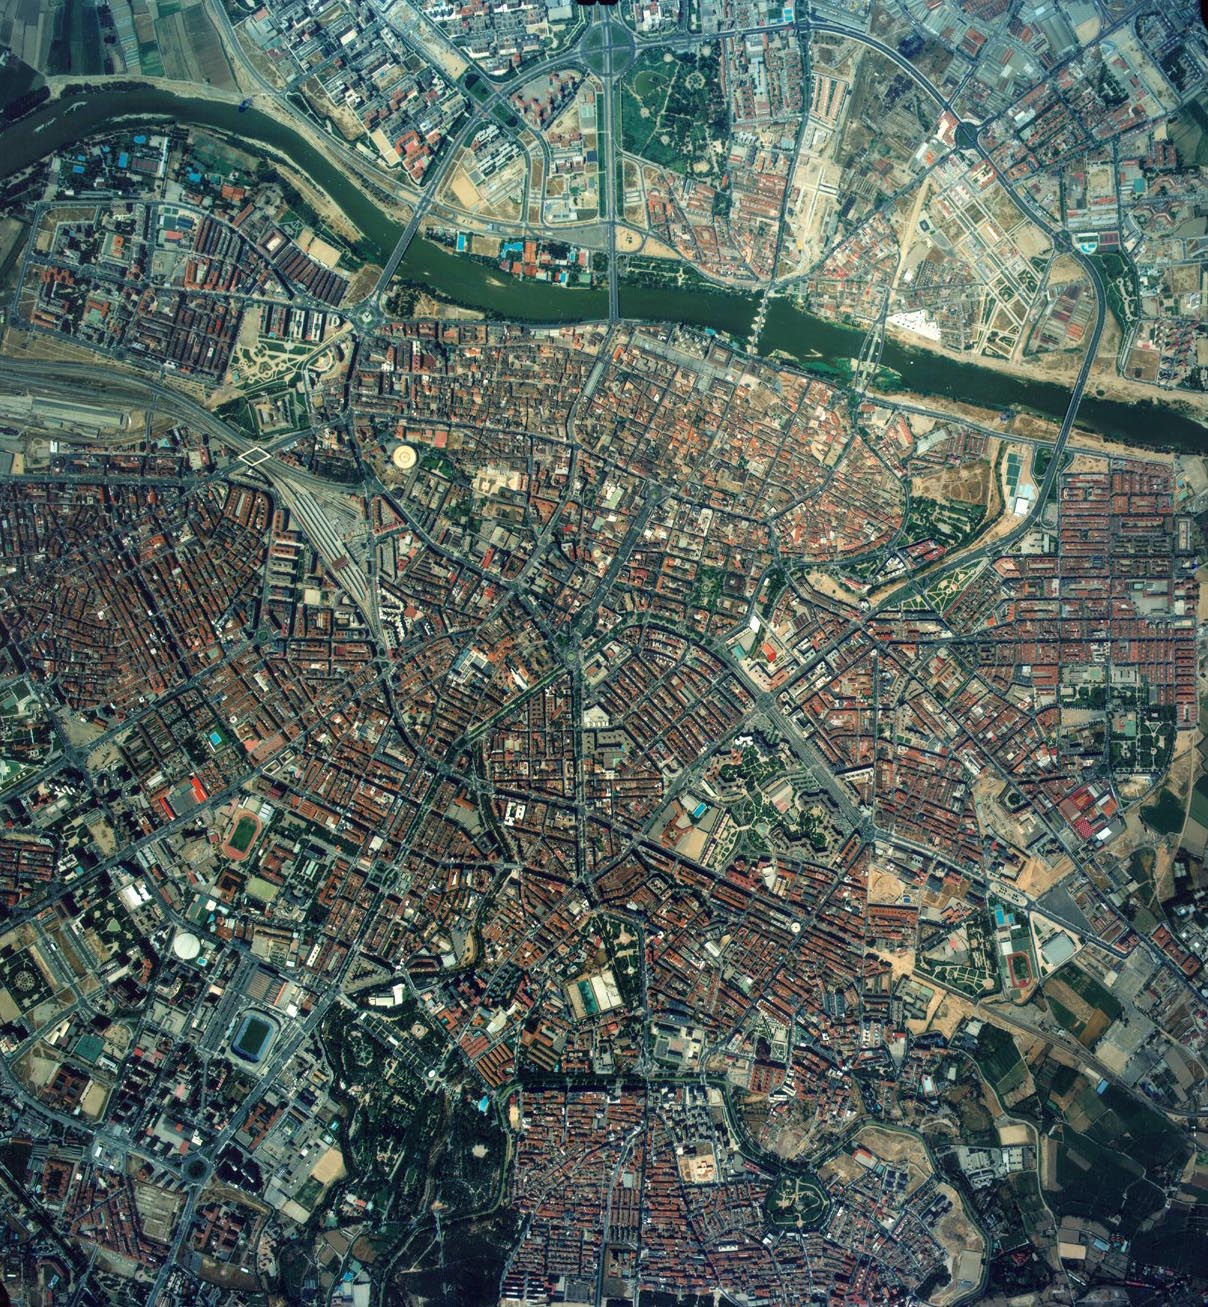 Vista aérea de Zaragoza